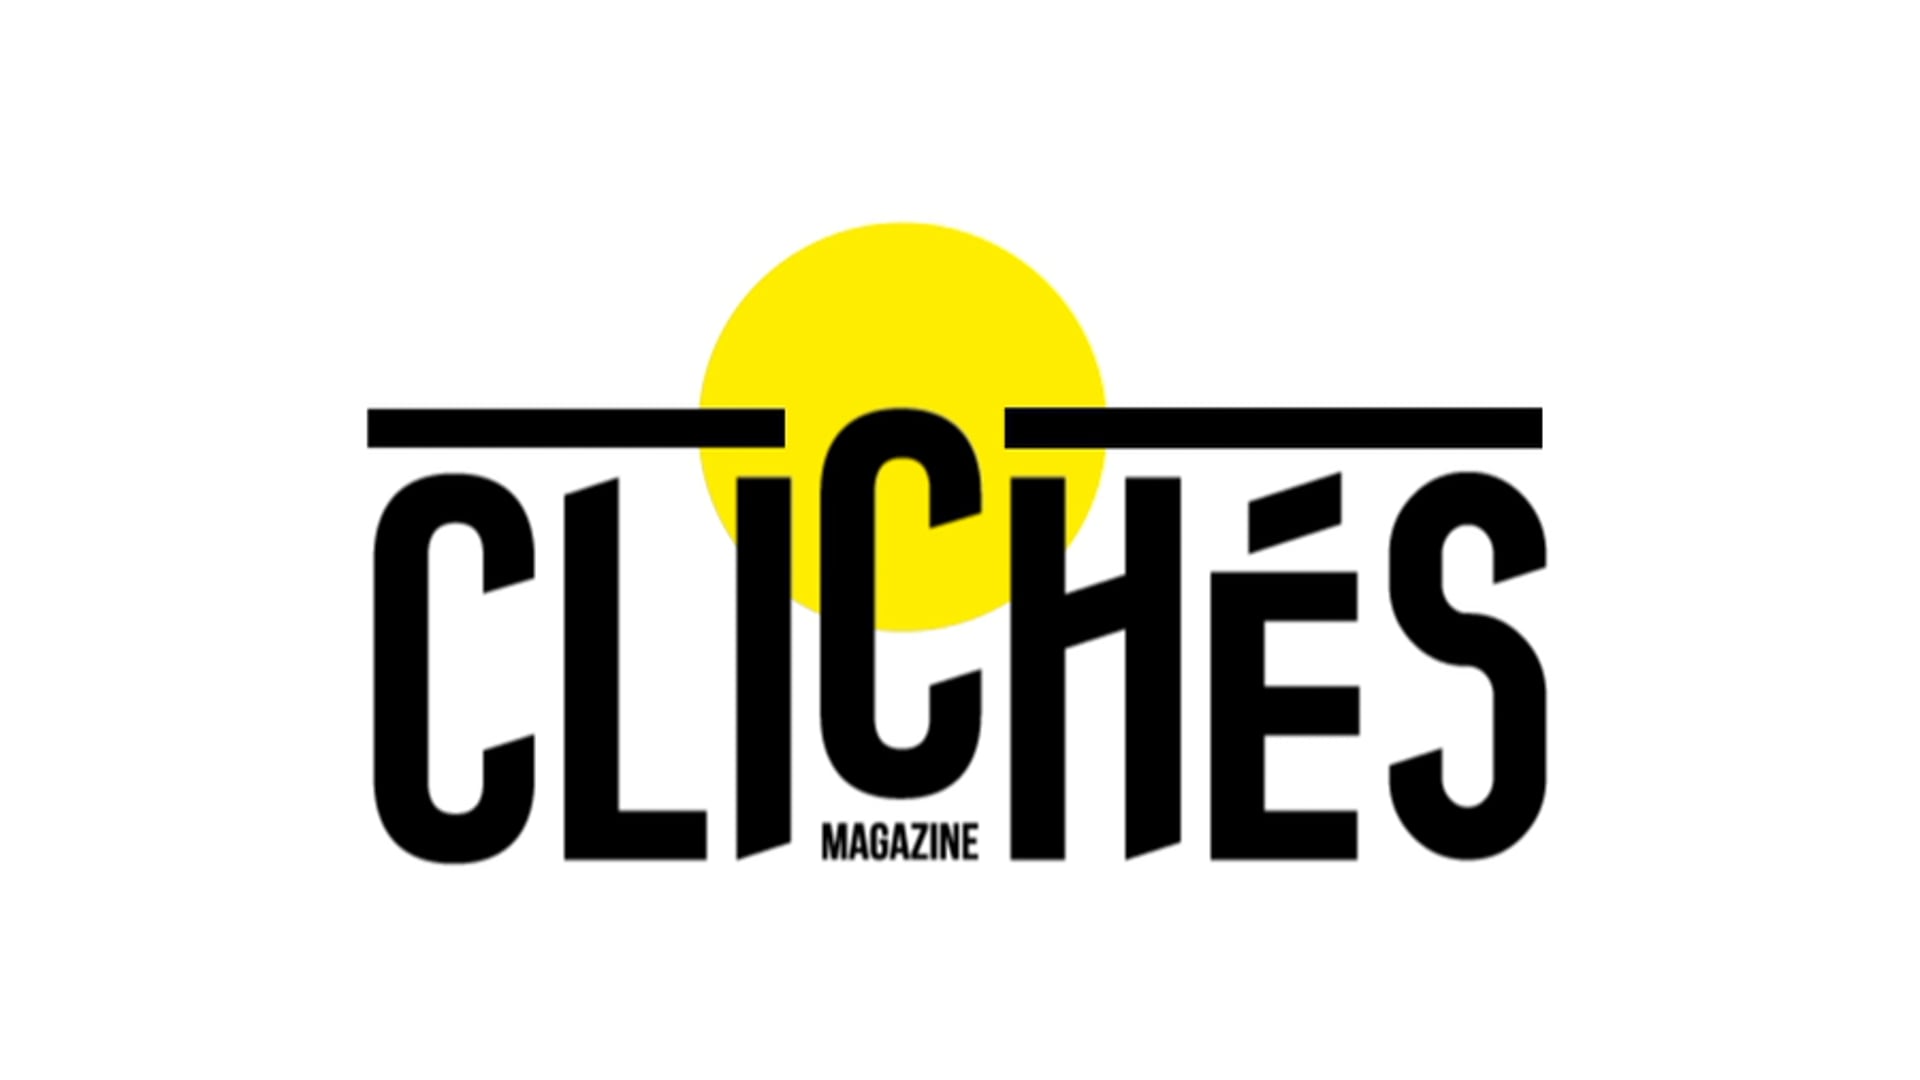 Clichés Magazine's logo - motion design for the website